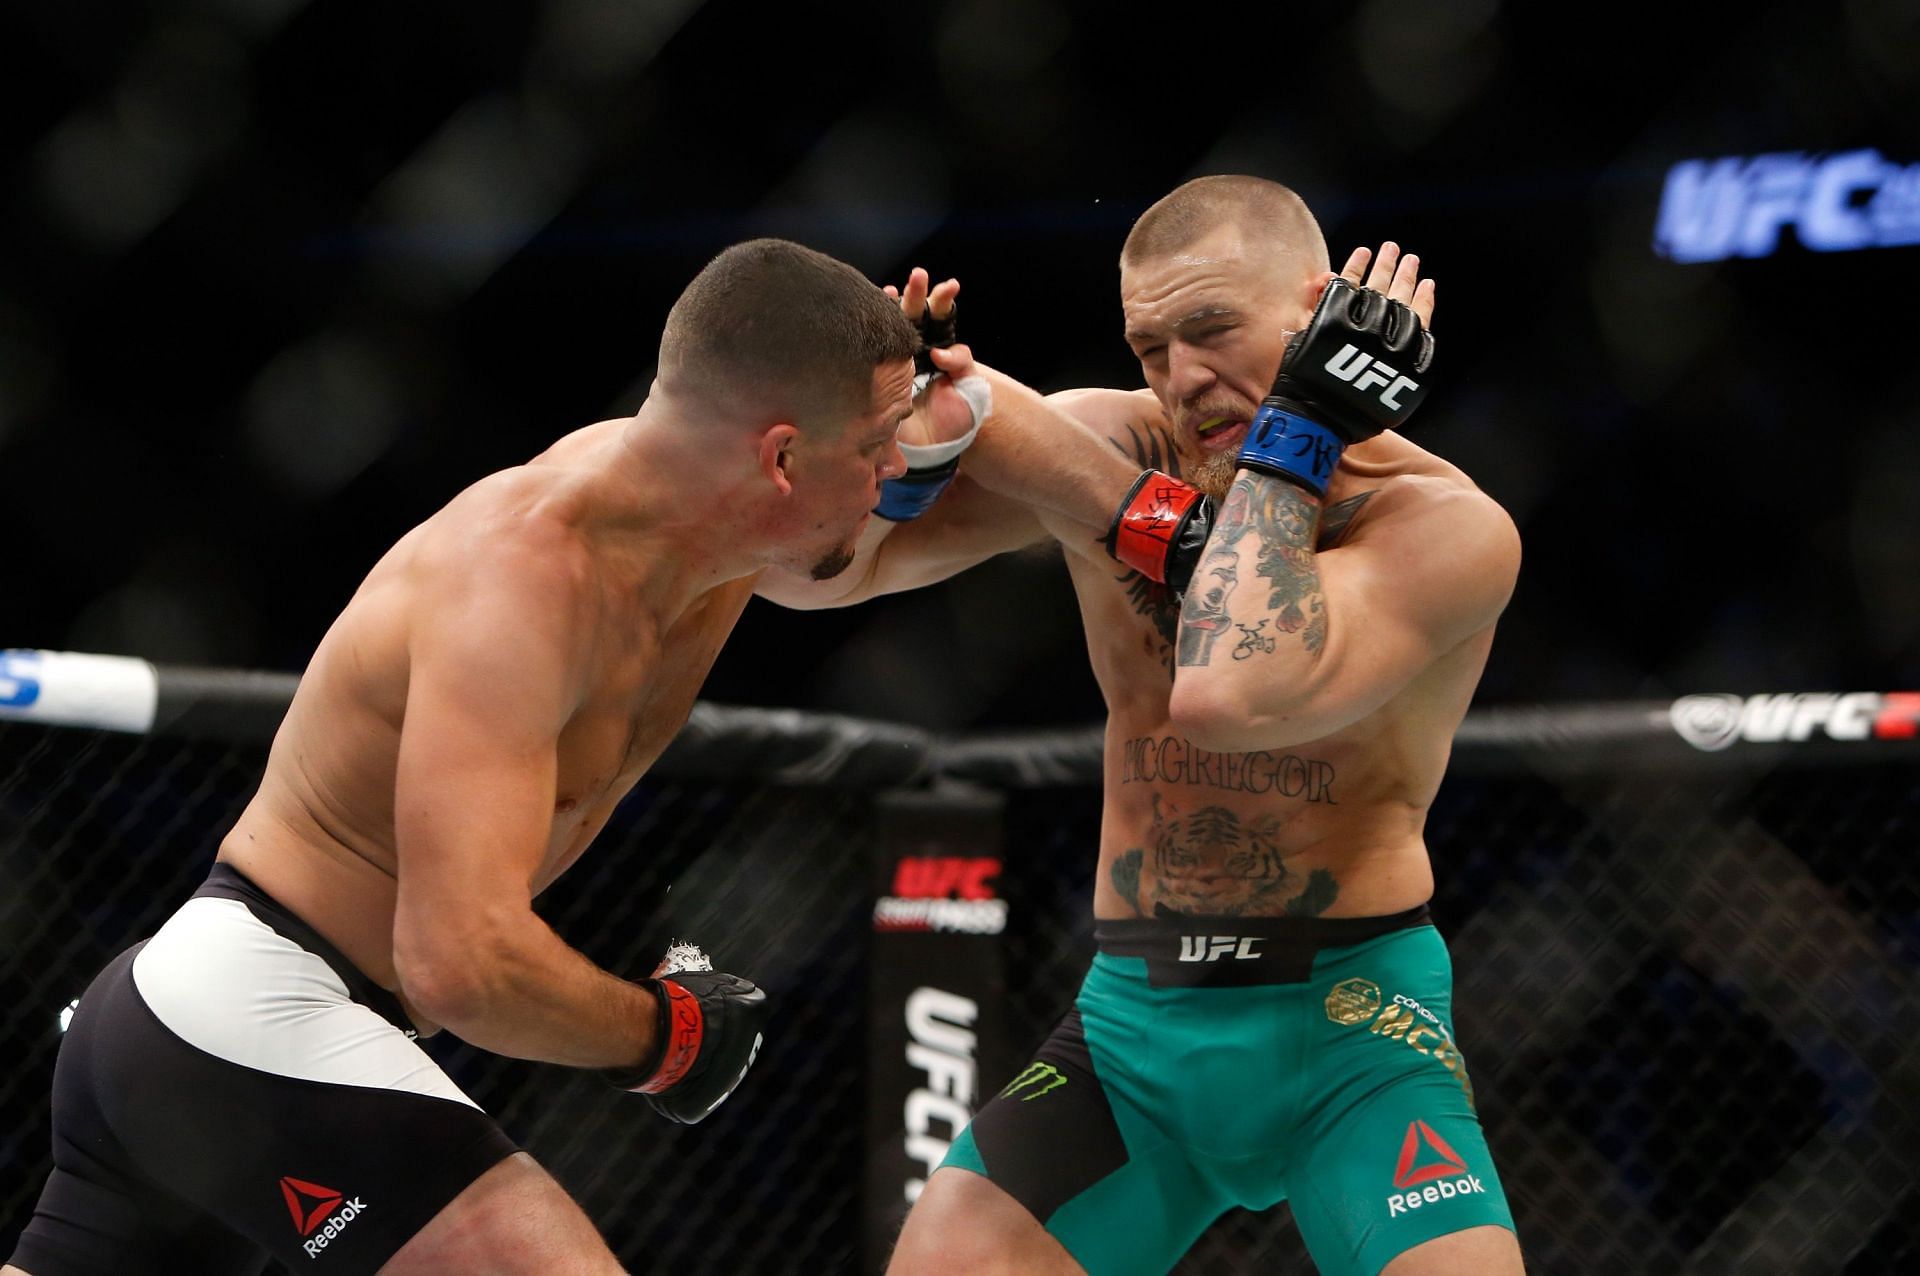 UFC 202: Nate Diaz vs Conor McGregor 2